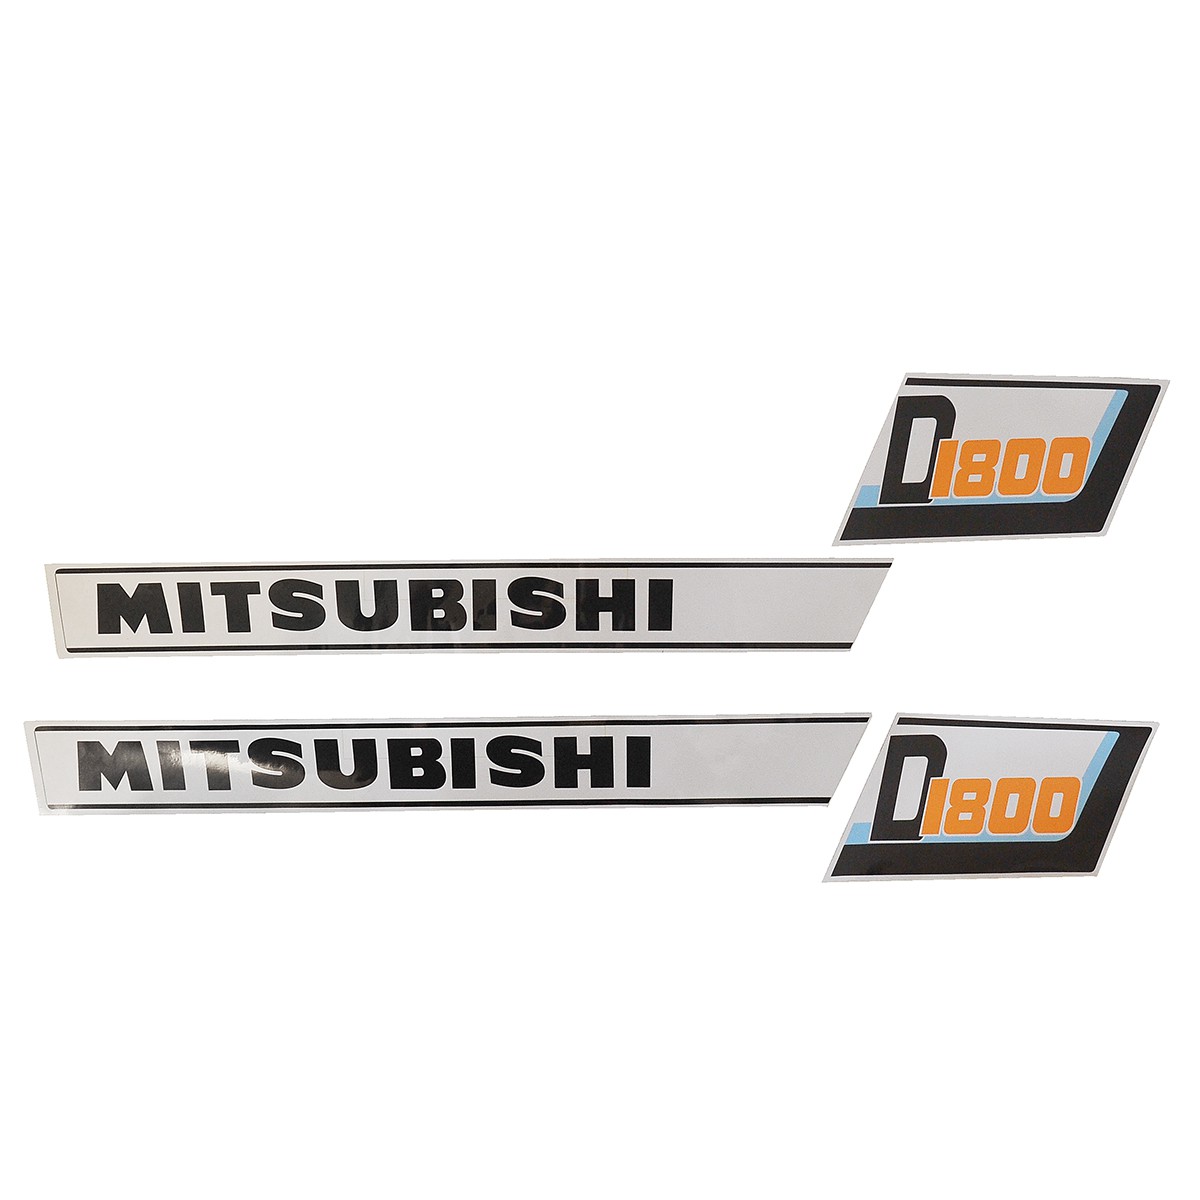 Mitsubishi D1800 stickers